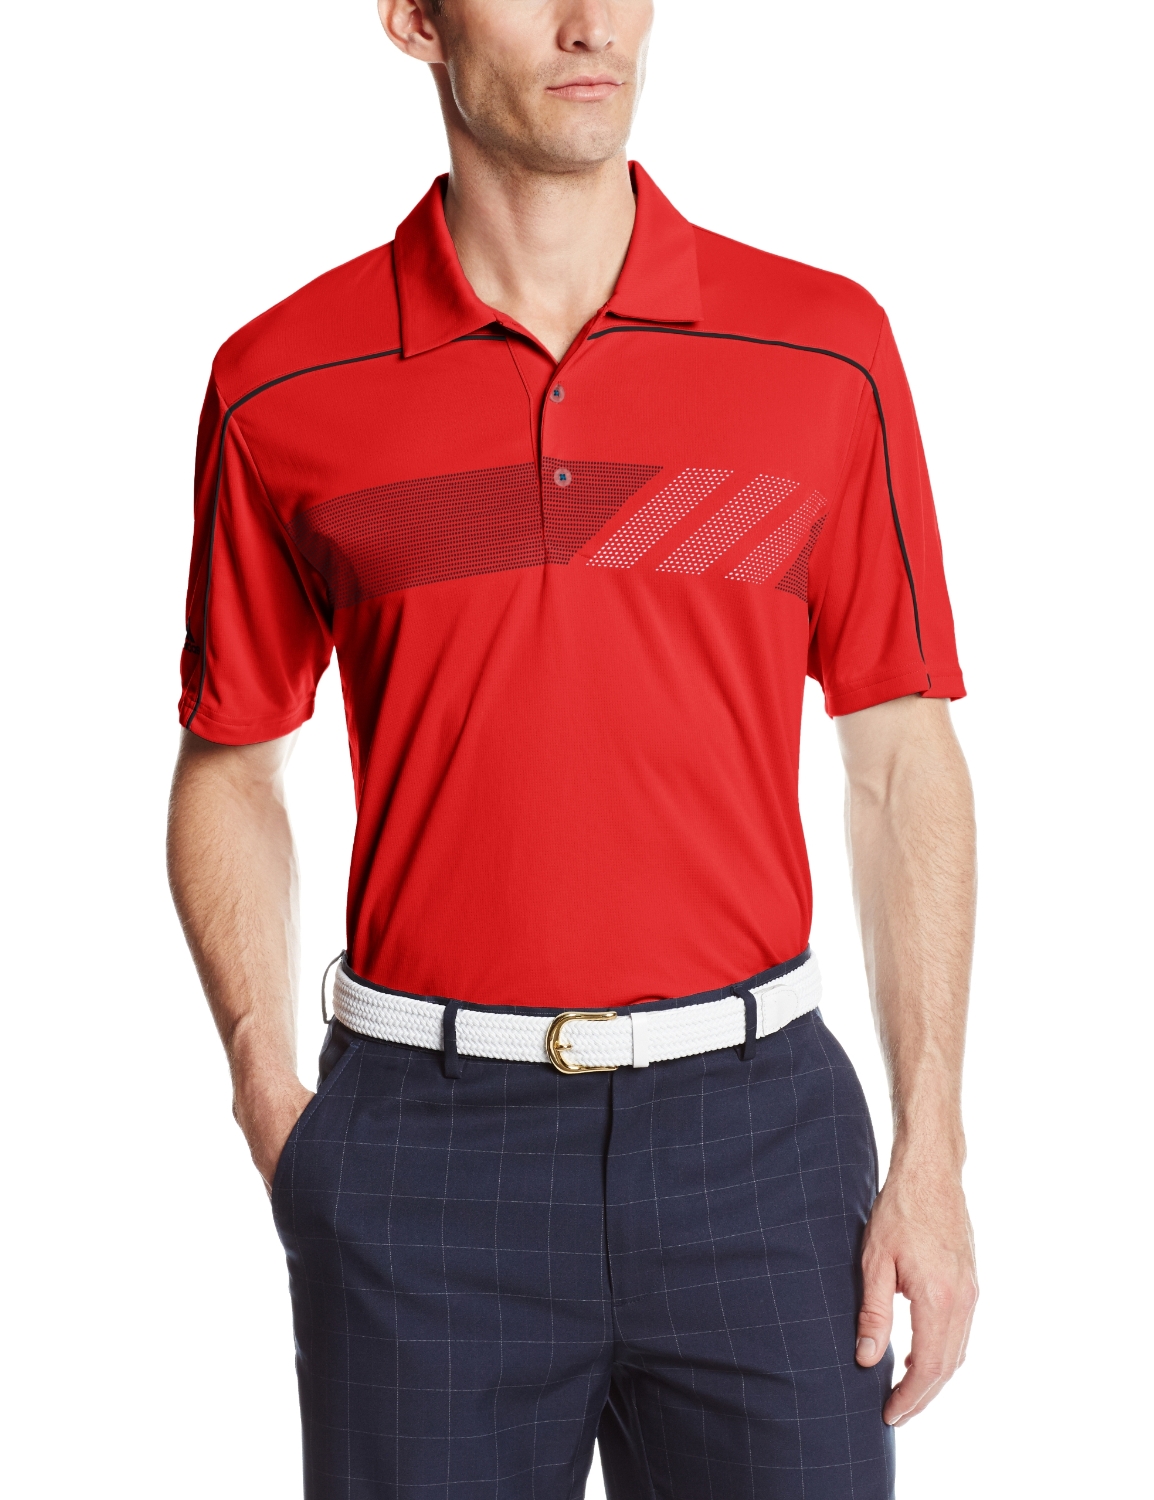 adidas red golf shirt